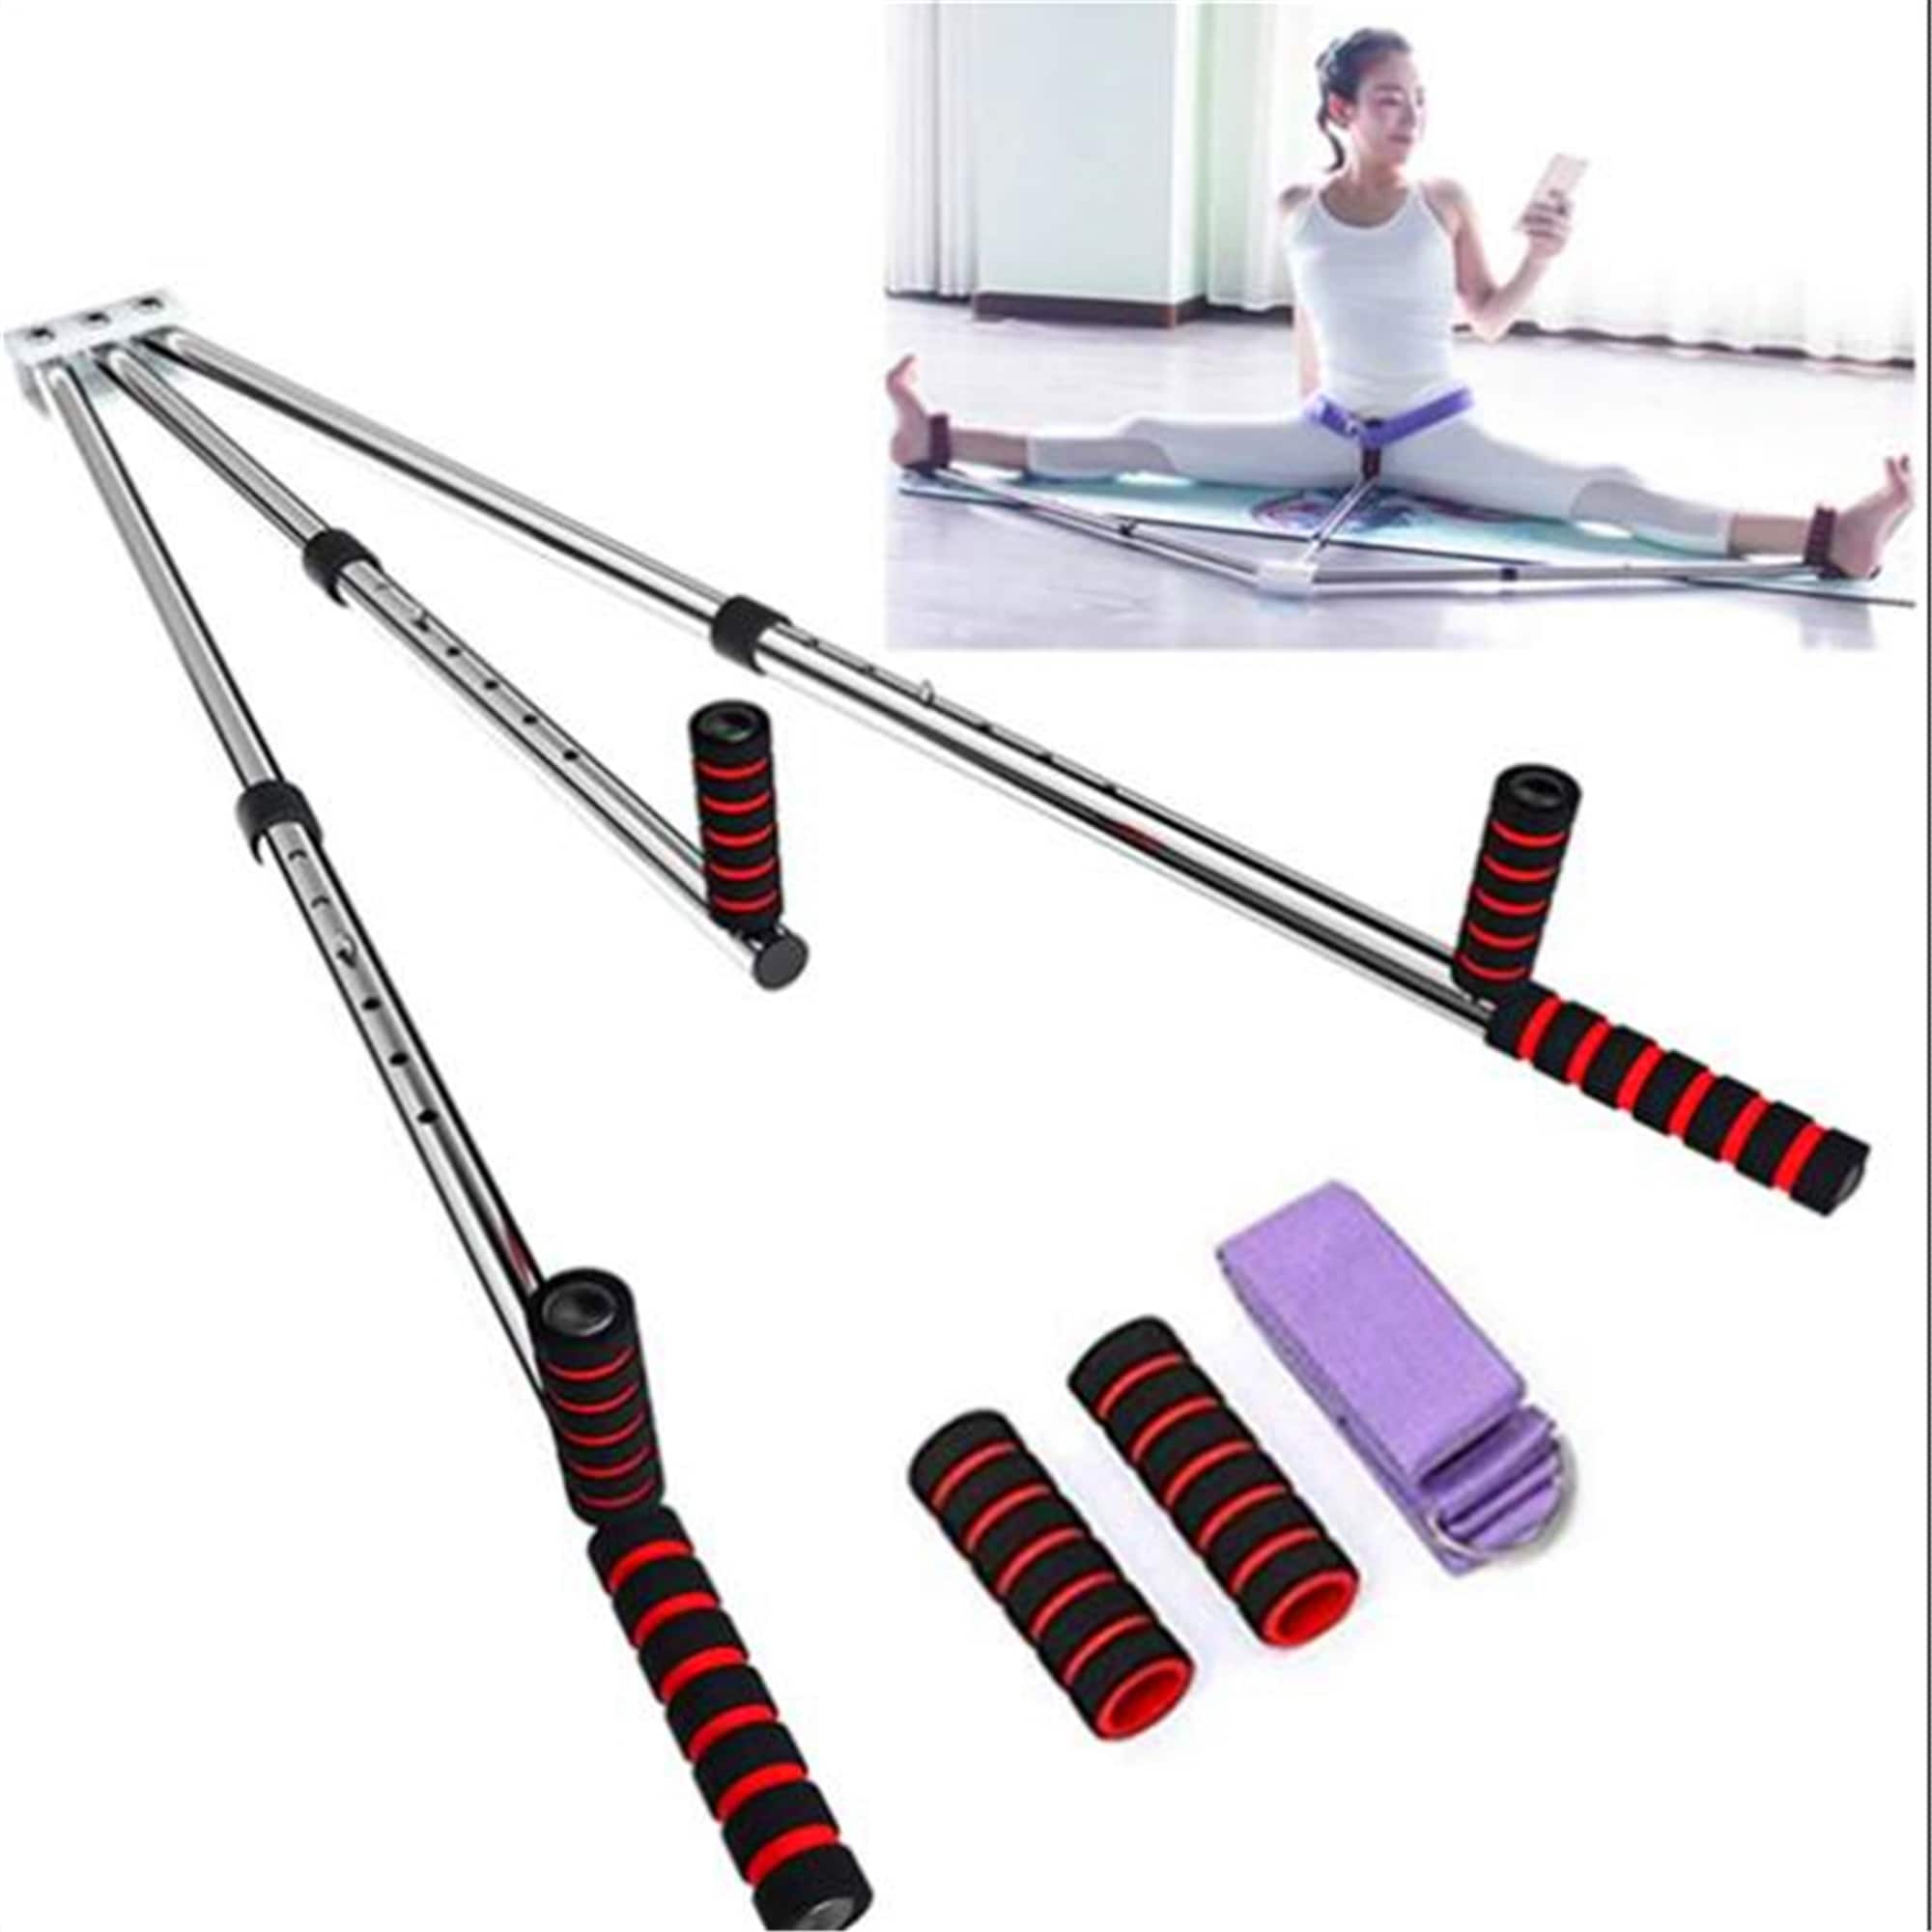  BODY RHYTHM Leg Stretcher - Split Machine for Leg Stretching -  Flexibility Stretching Equipment - Ballet, Yoga, Dance, Martial Arts, MMA -  Home Yoga Gym Fitness : Sports & Outdoors